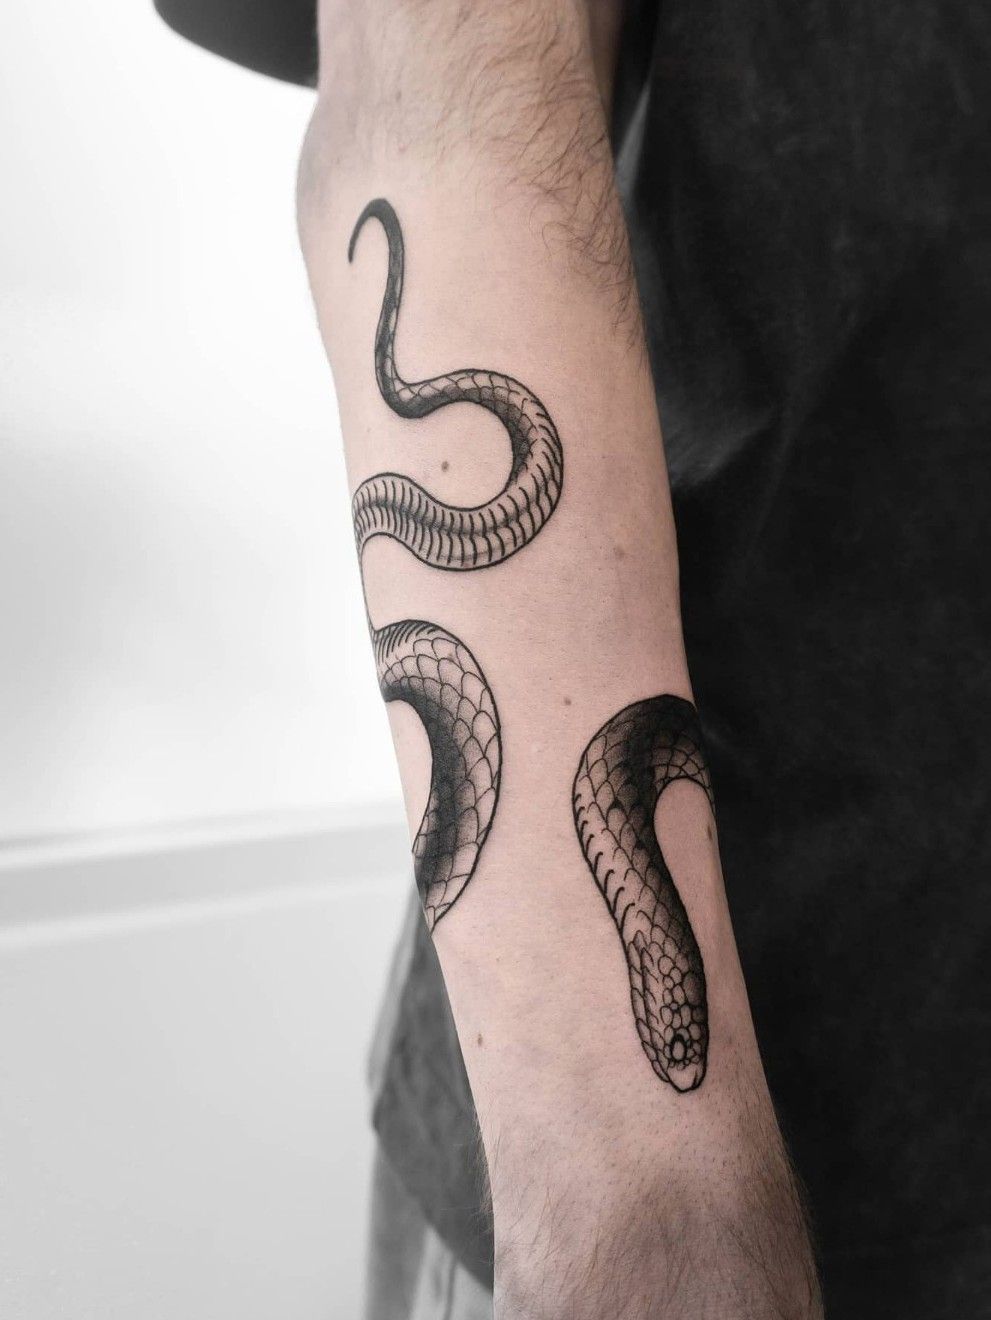 17 Snakes Wrapped Around Arm Tattoo Designs  Ideas  PetPress  Around arm  tattoo Trendy tattoos Hand tattoos